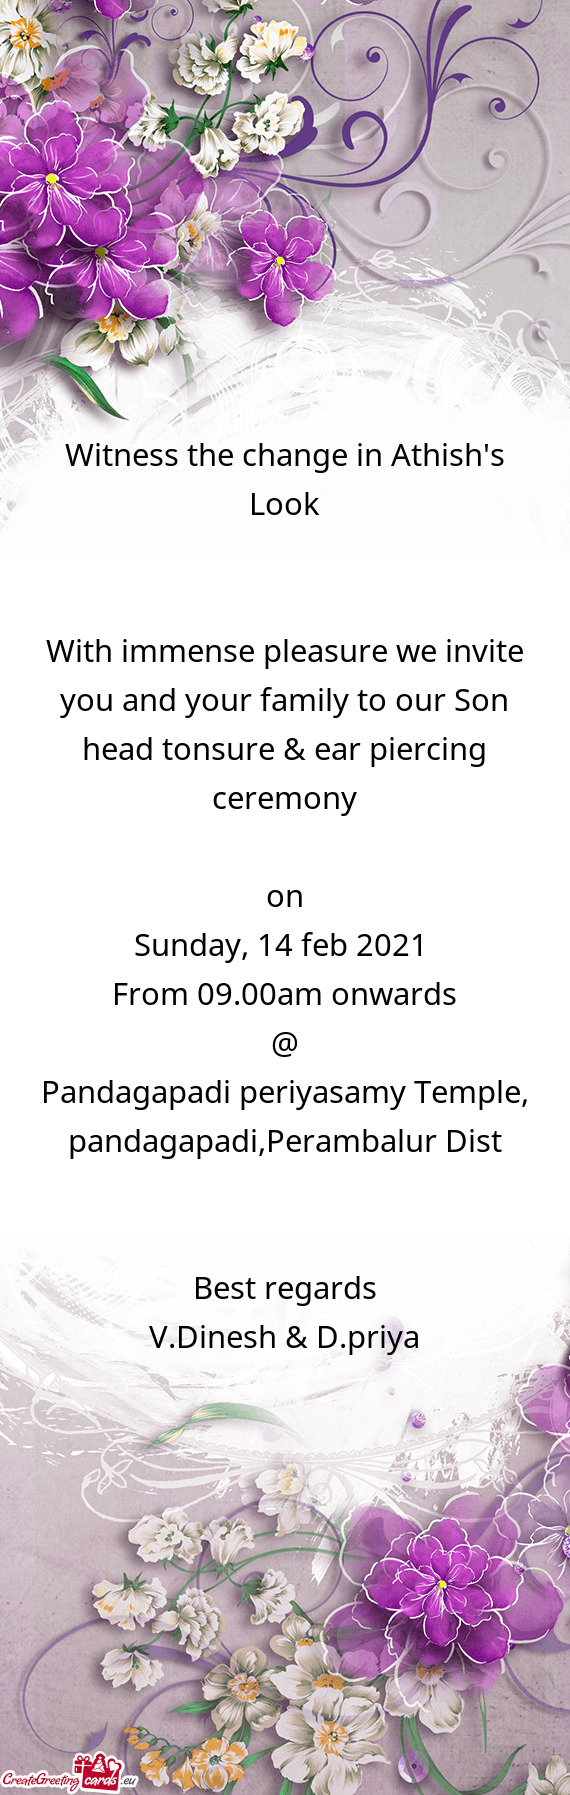 Pandagapadi periyasamy Temple